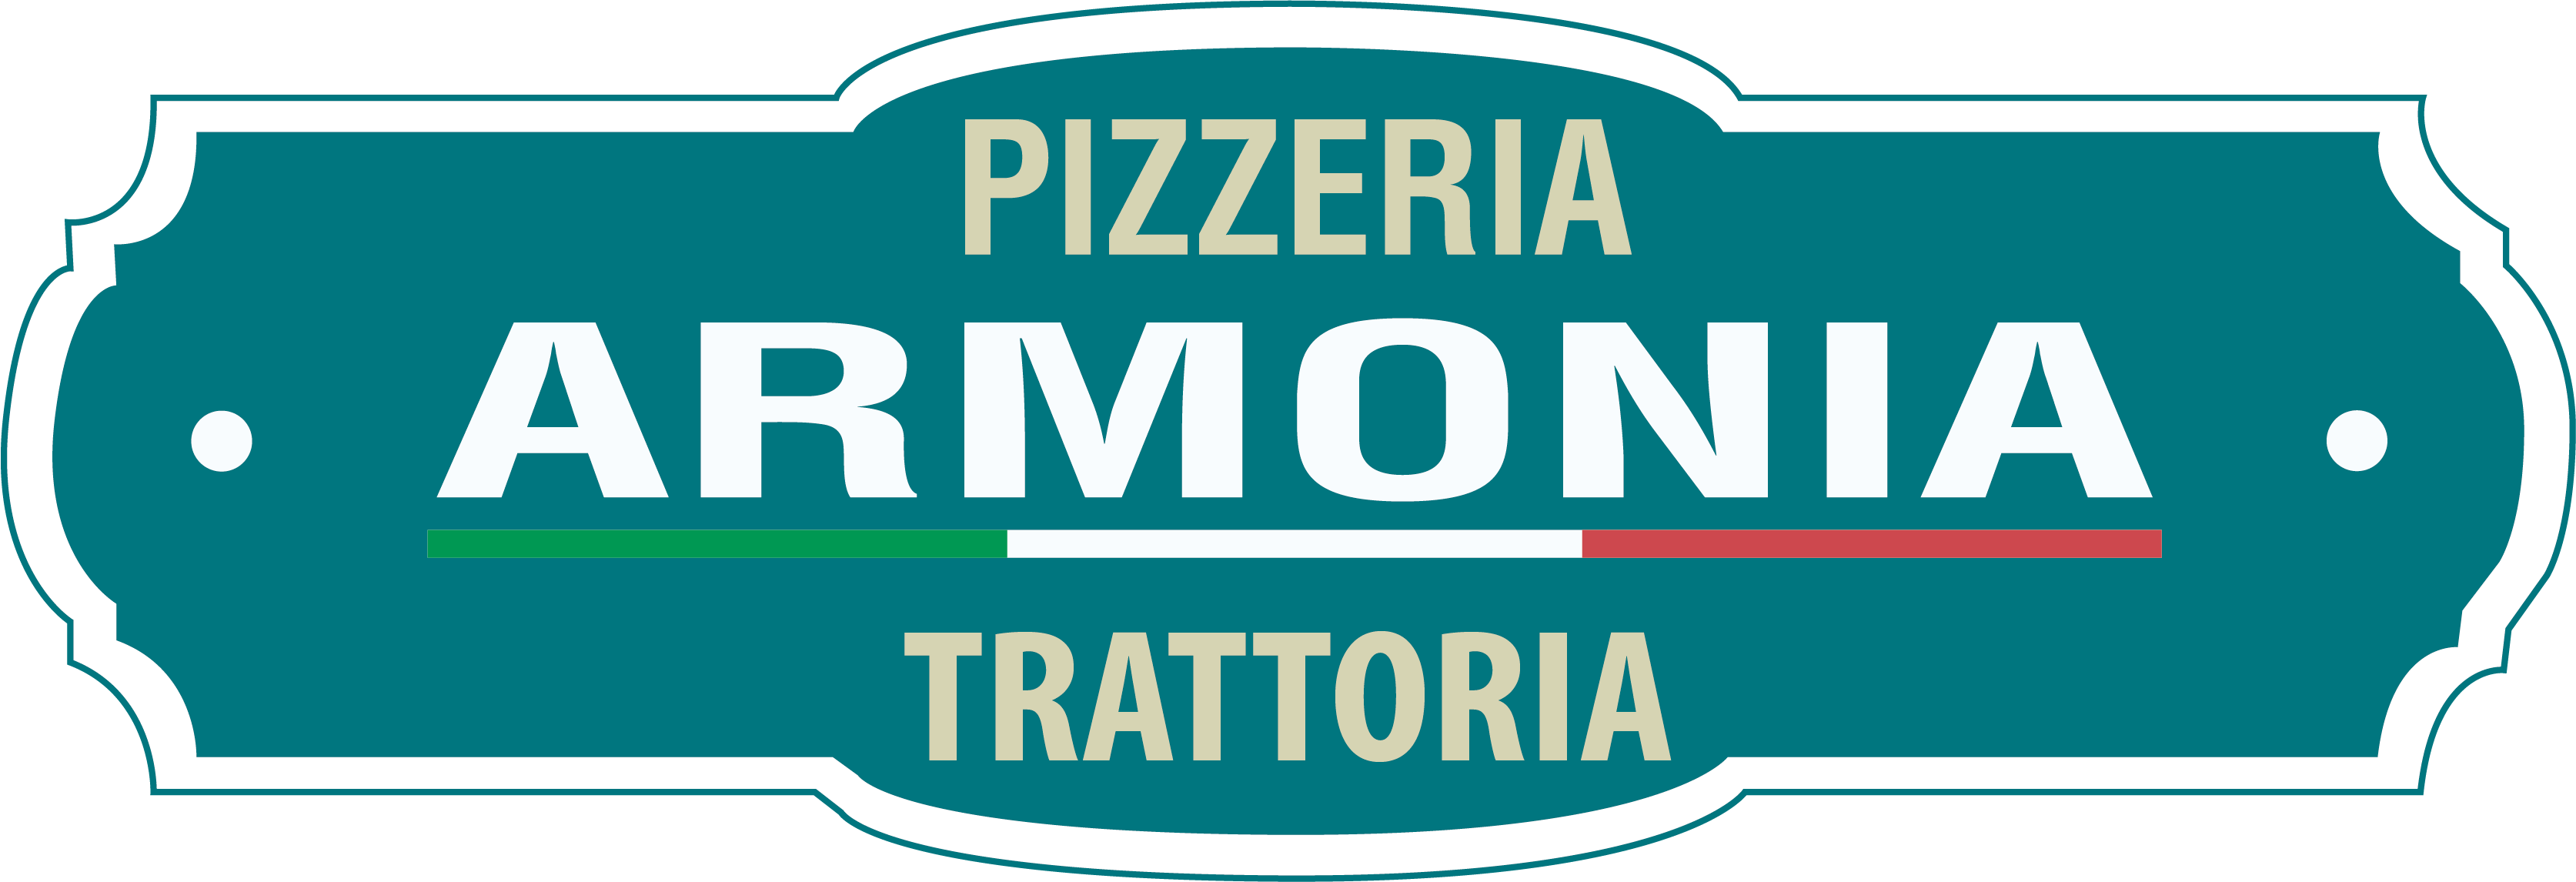 Onlinebestellung | Pizzeria-Armonia